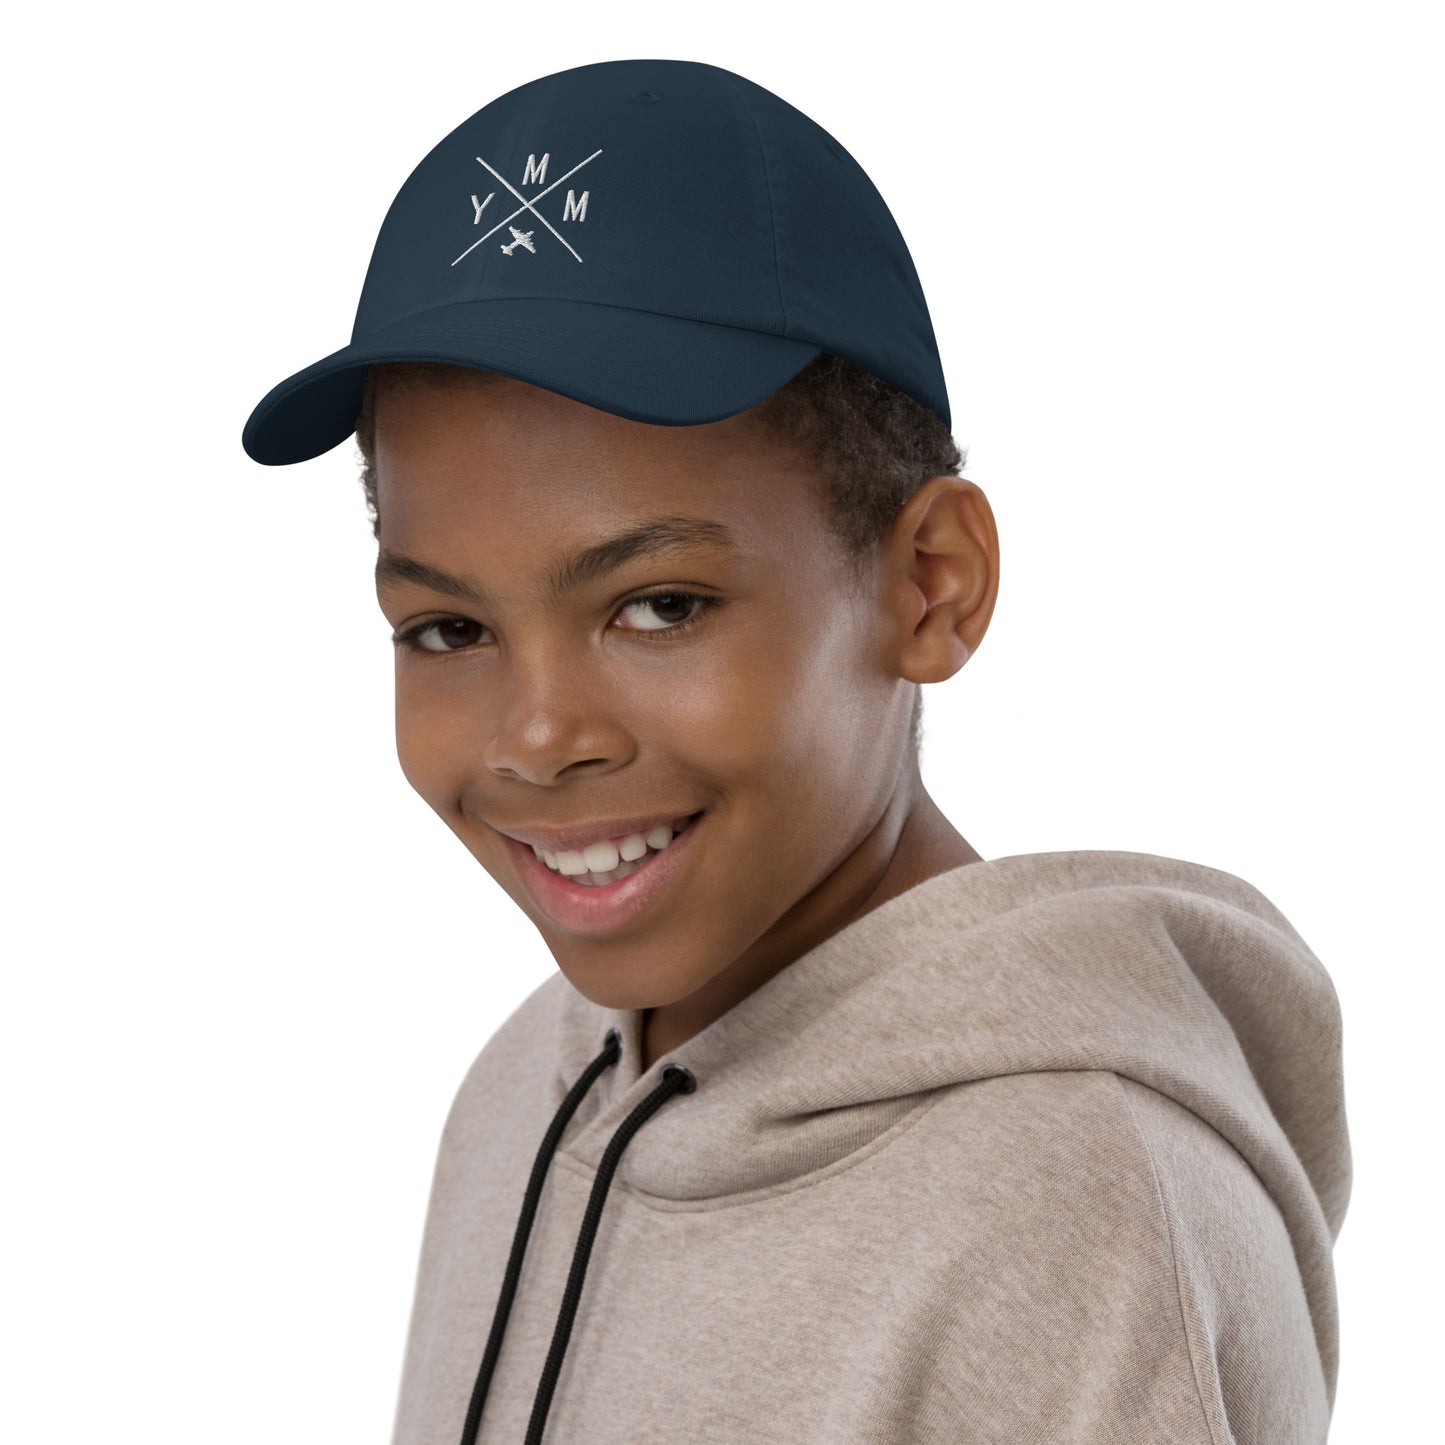 Crossed-X Kid's Baseball Cap - White • YMM Fort McMurray • YHM Designs - Image 03